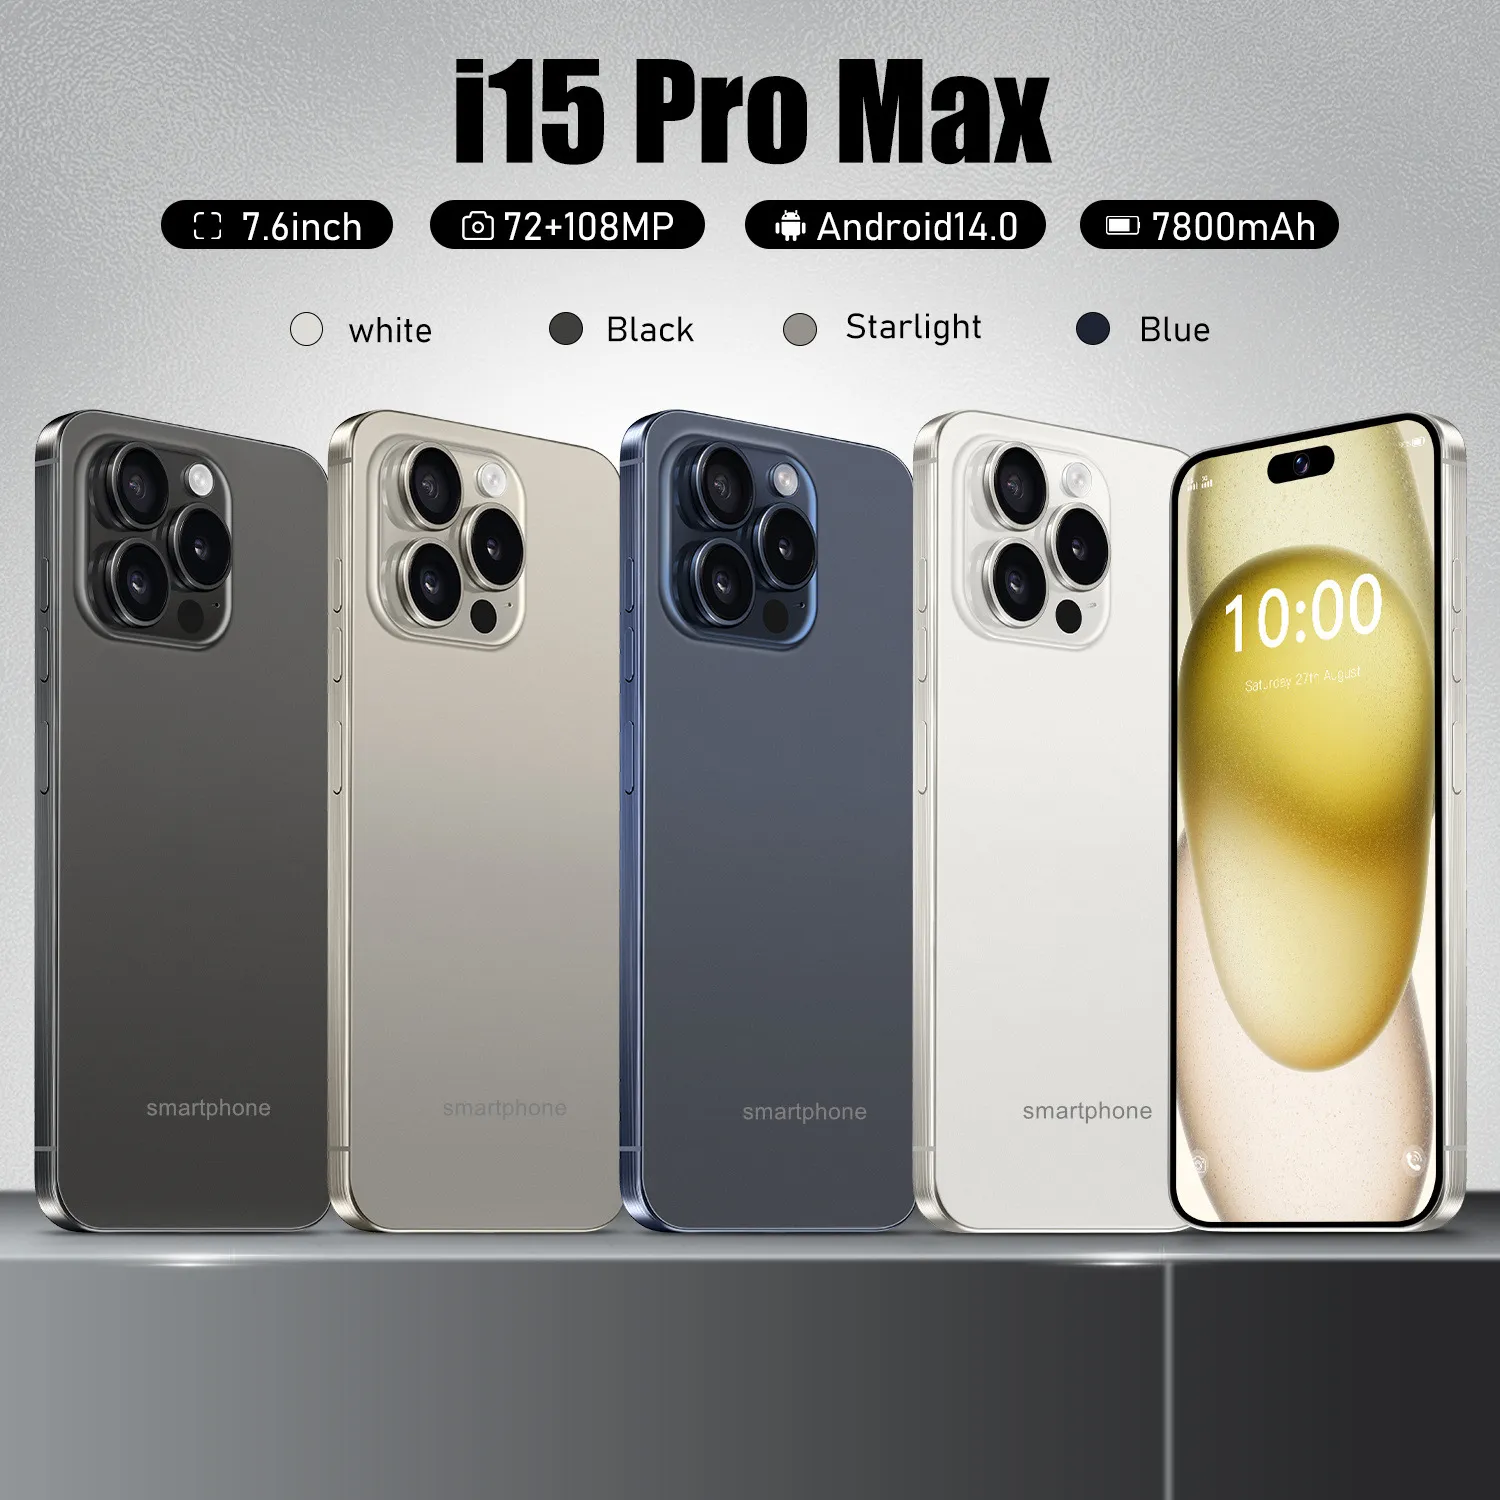 15 Pro Max Show 5G Mobilephone 64GB ROM 휴대폰 6.8 인치 프로테이블 카메라 Bluetooth WiFi WCDMA MOBIEPHONE와 상자